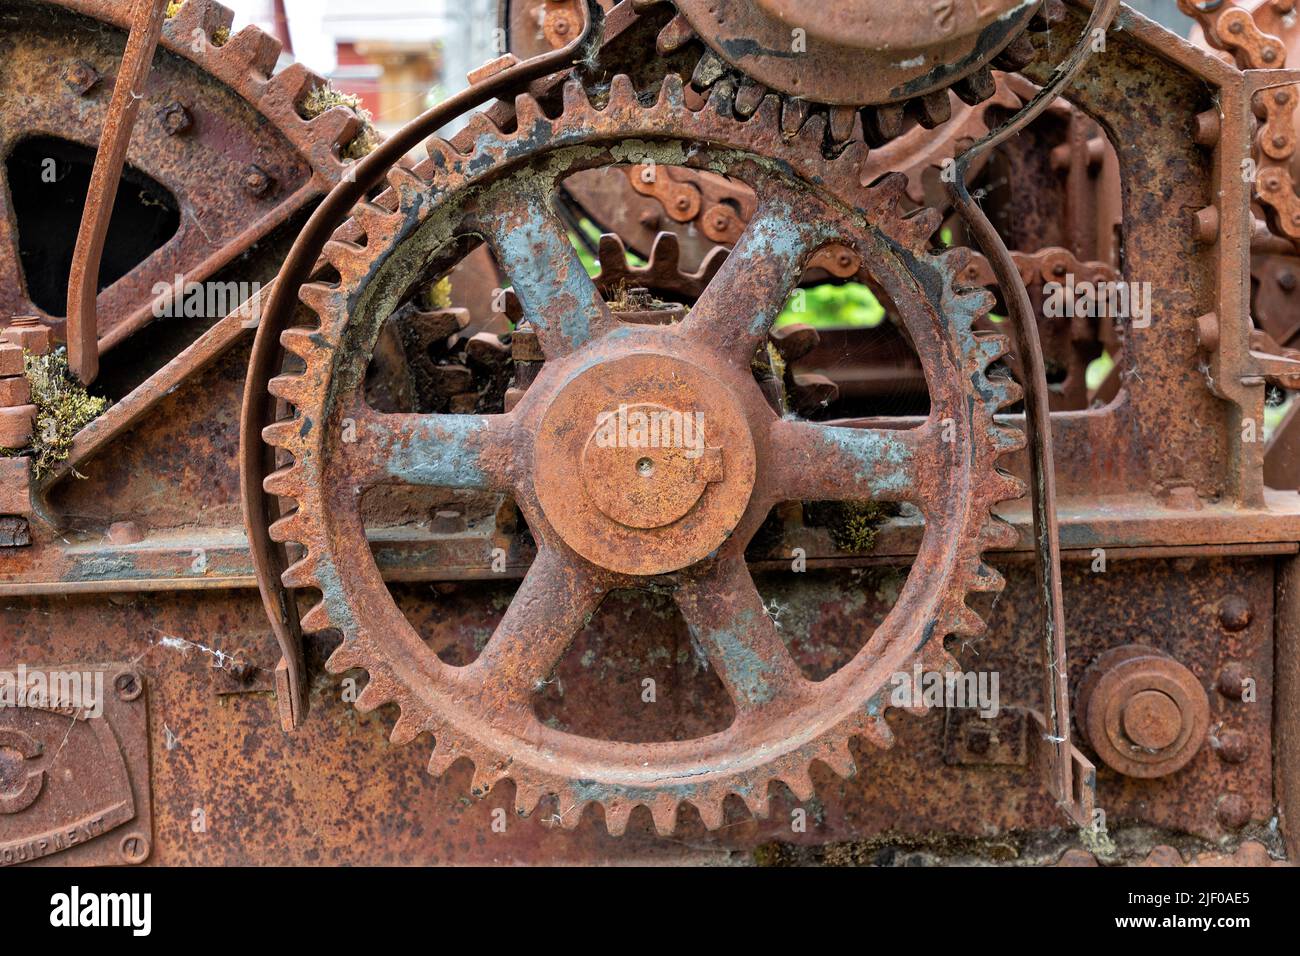 Rusty old machinery outside. Stock Photo